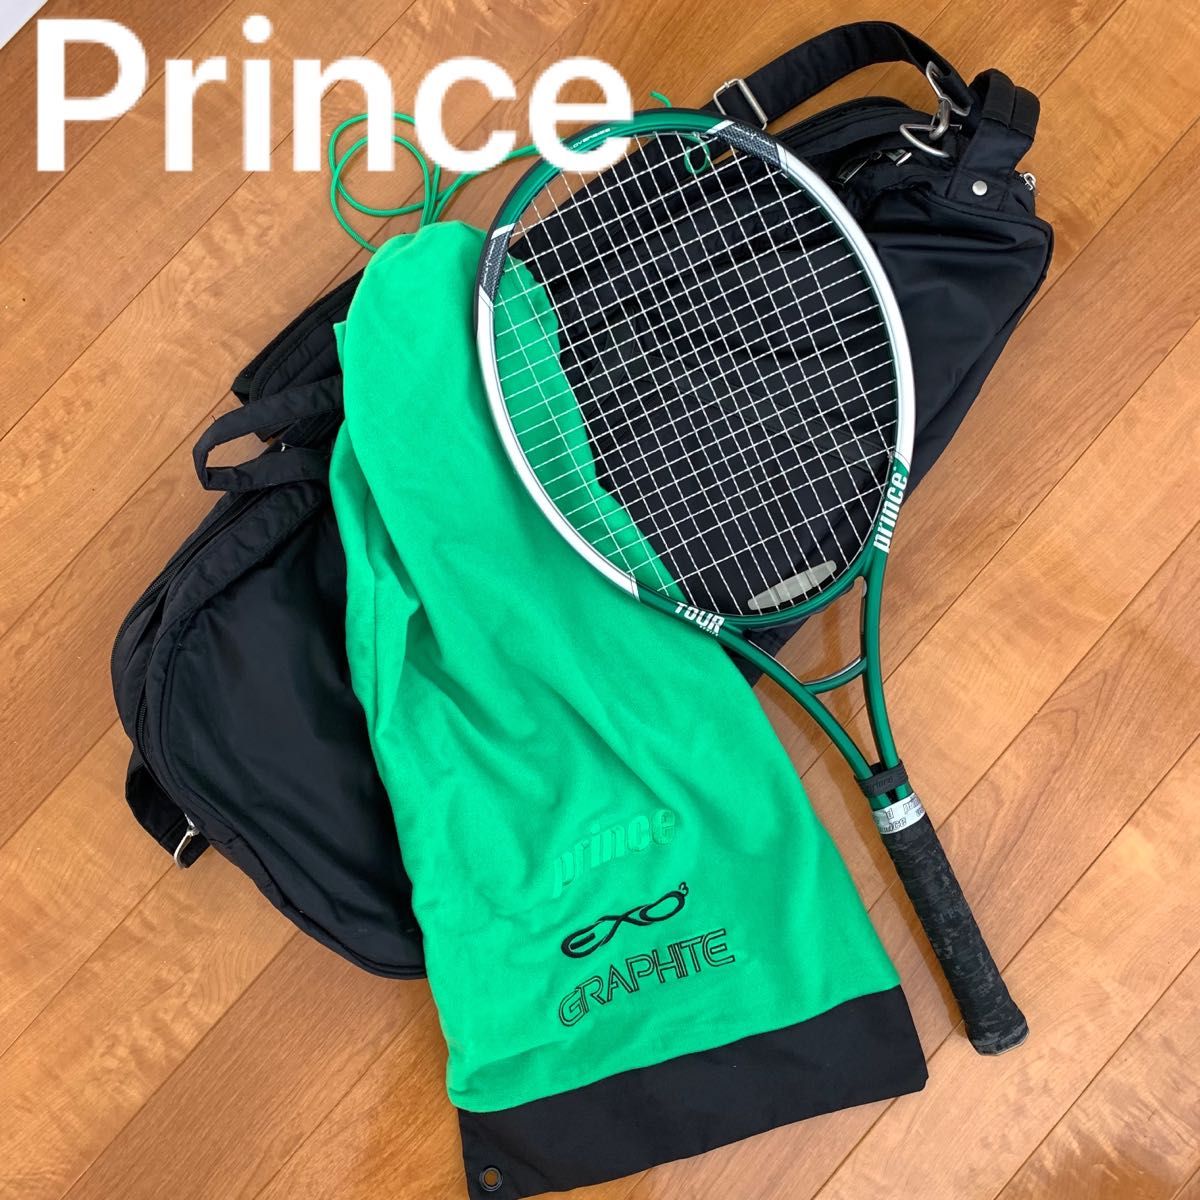 Prince tour 770 プリンス テニスラケット、ラケットバッグ、ラケットカバー 3点セット